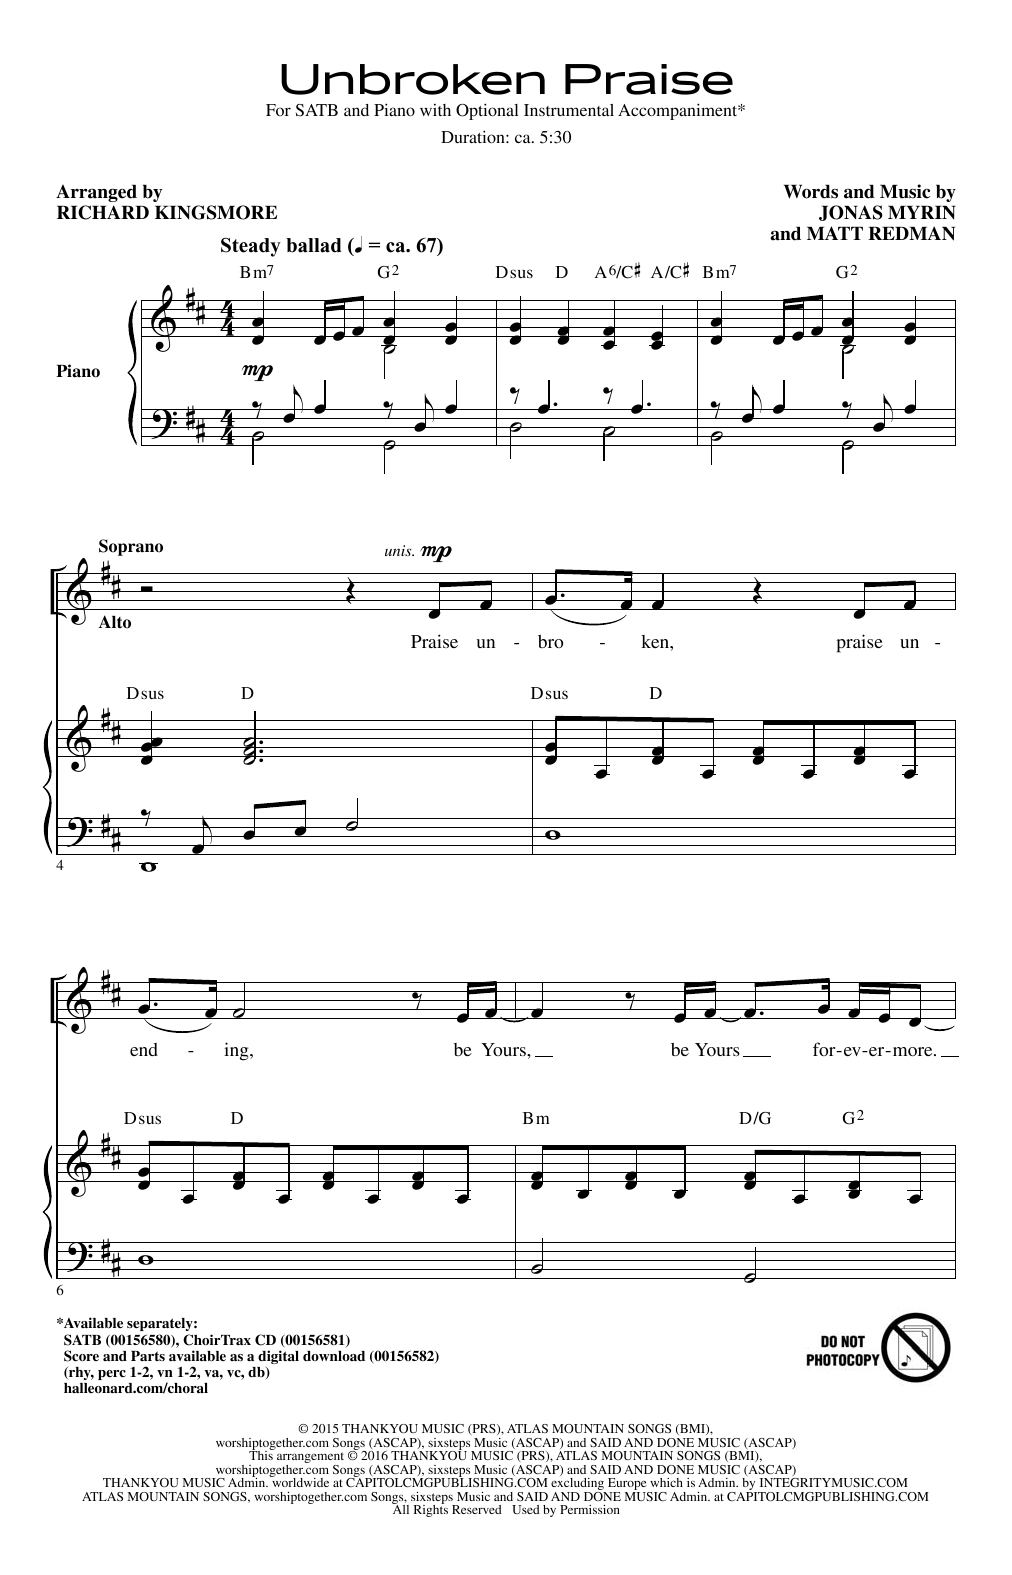 Richard Kingsmore Unbroken Praise Sheet Music Notes & Chords for SATB - Download or Print PDF